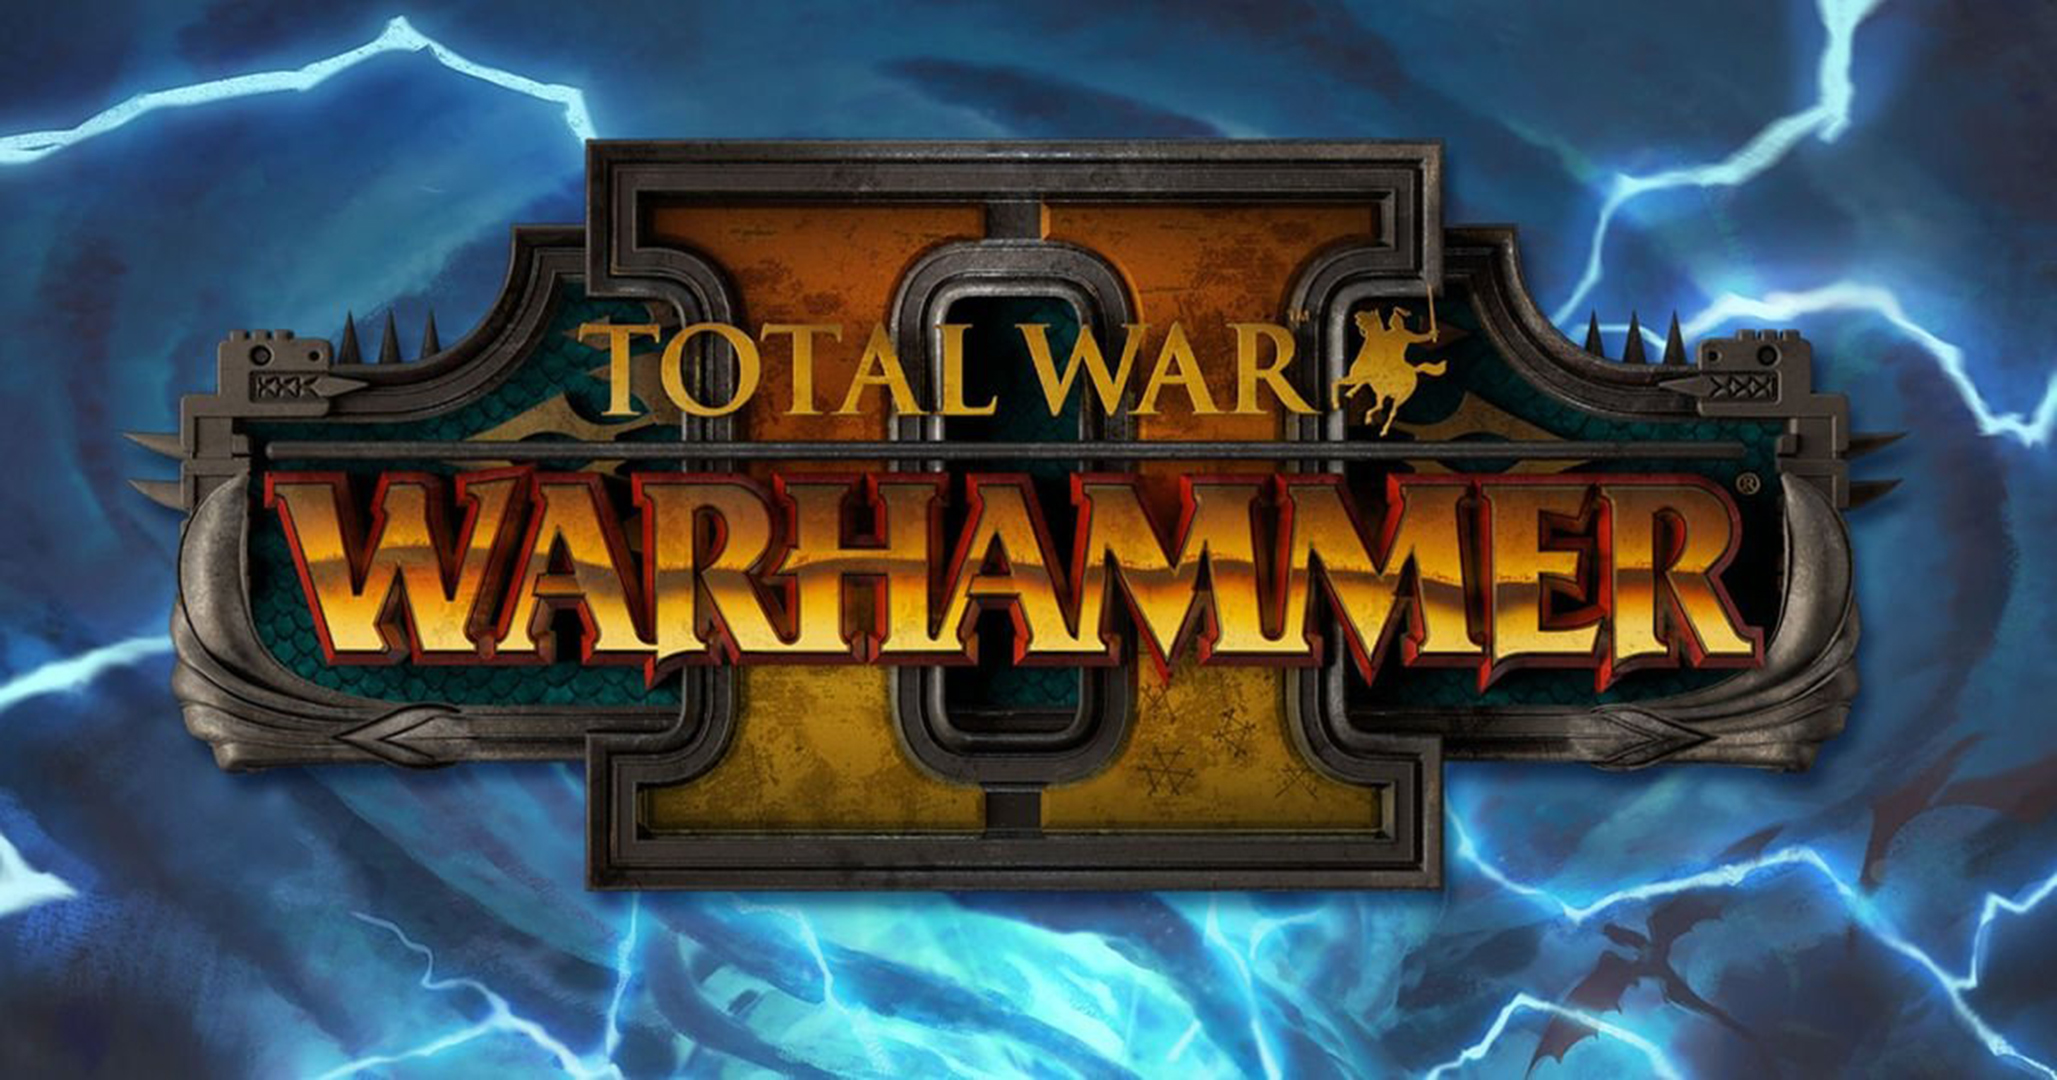 free download total war hammer 2